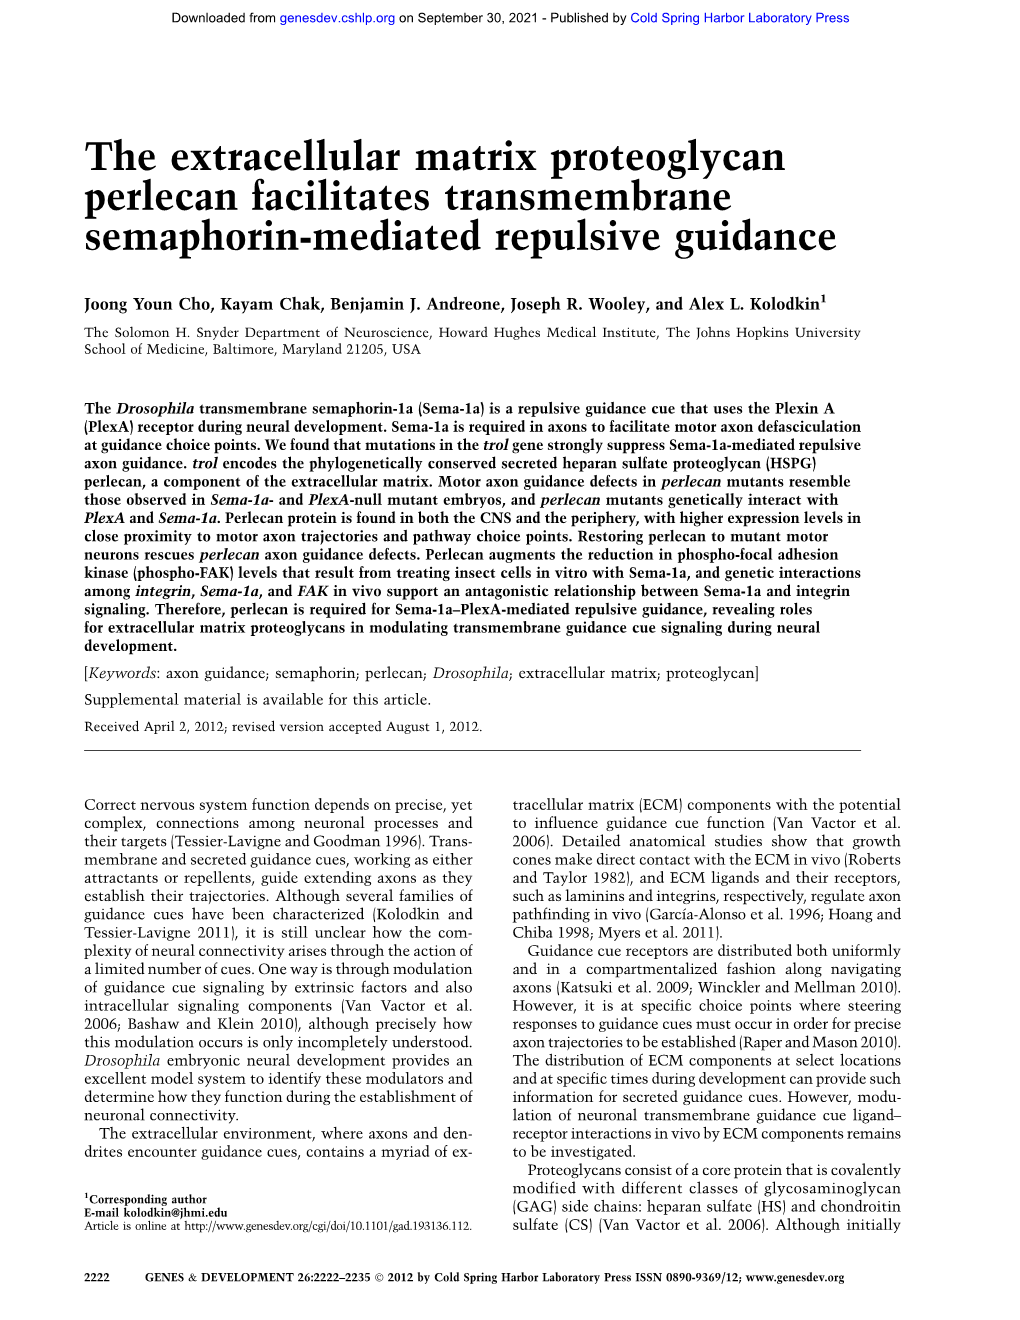 The Extracellular Matrix Proteoglycan Perlecan Facilitates Transmembrane Semaphorin-Mediated Repulsive Guidance